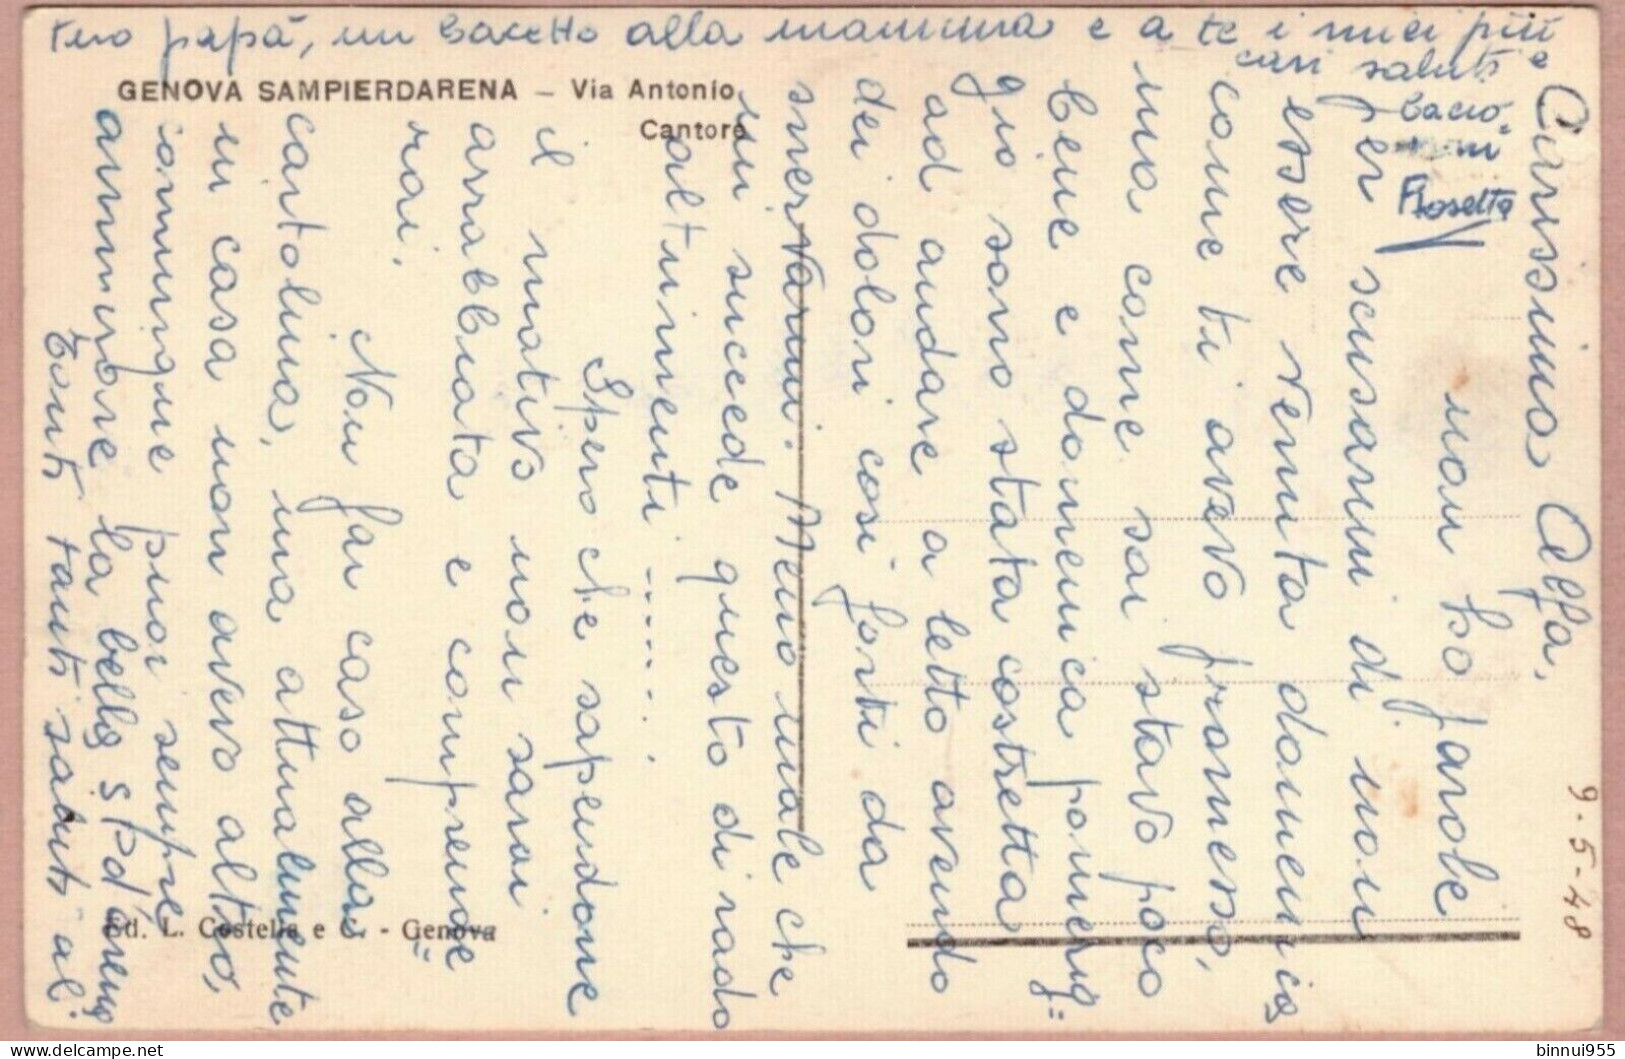 Cartolina Genova Sampierdarena Via Cantore - Viaggiata In Busta 1948 - Genova (Genoa)